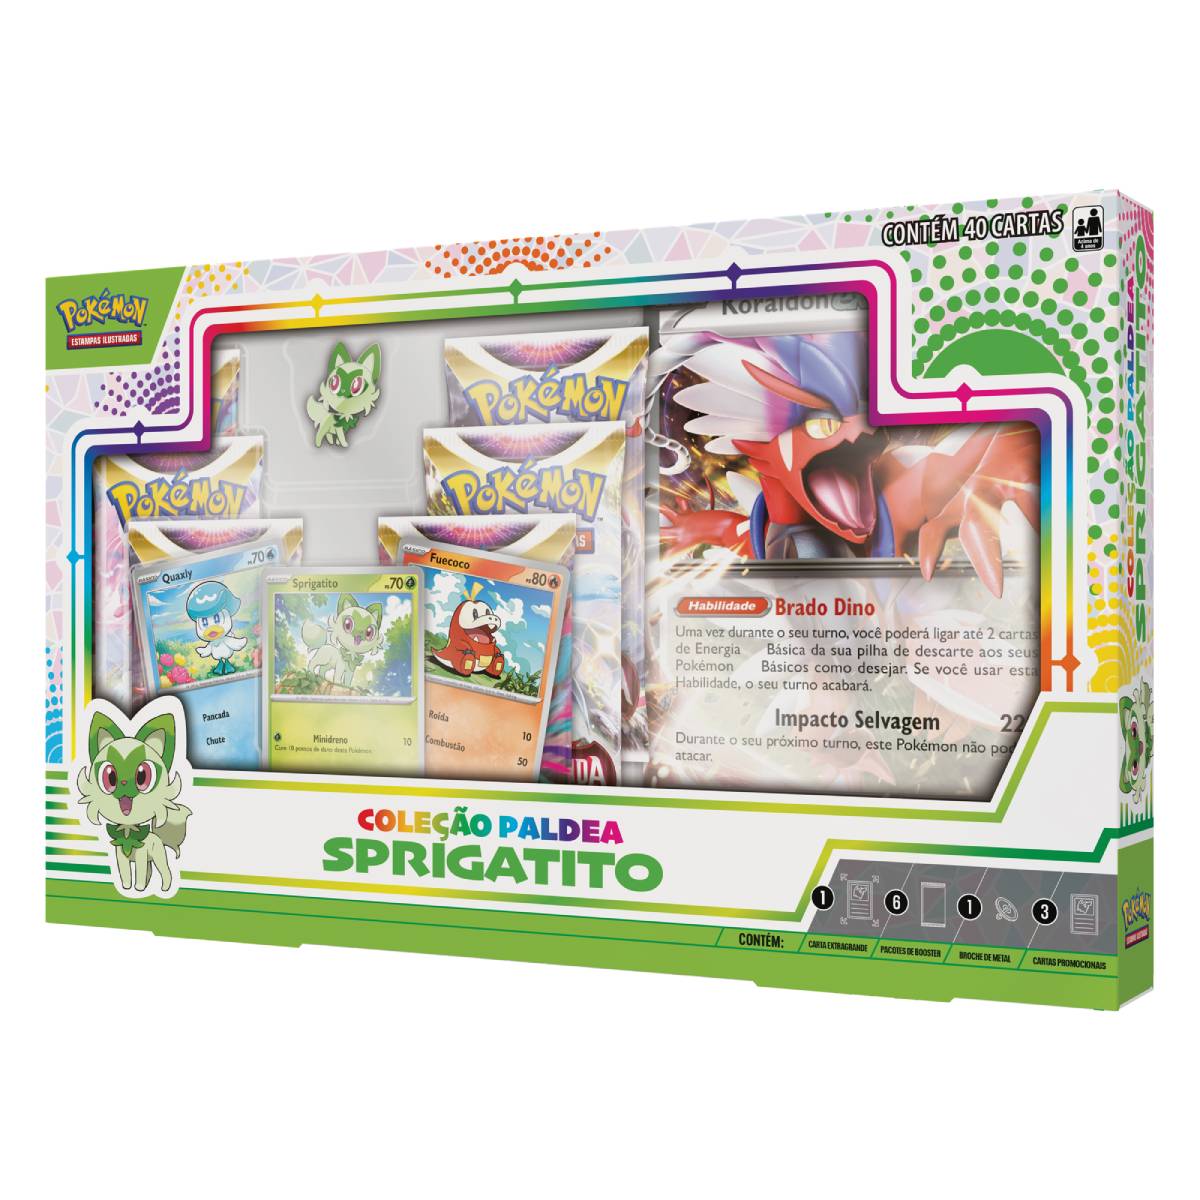 Cards Pokémon - Box Eternatus - Vmax - Copag - Ri Happy